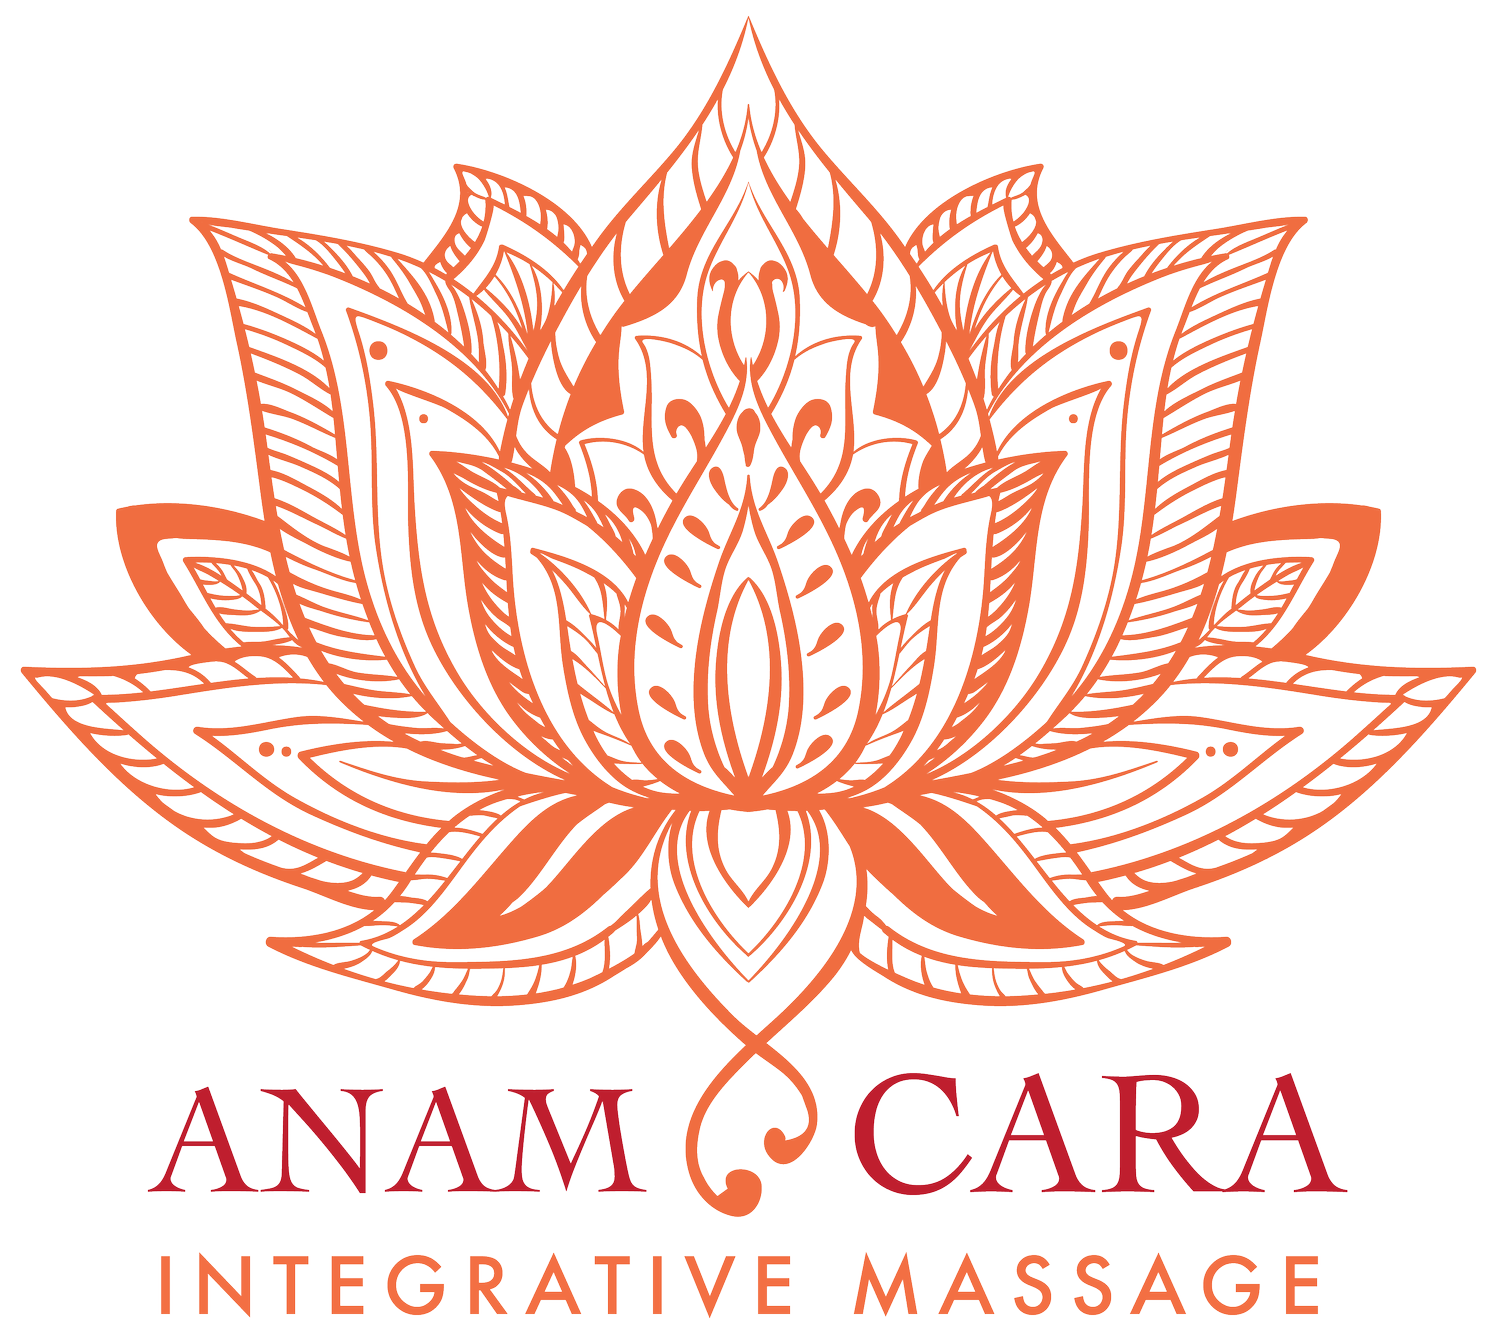 Anam Cara Integrative Massage